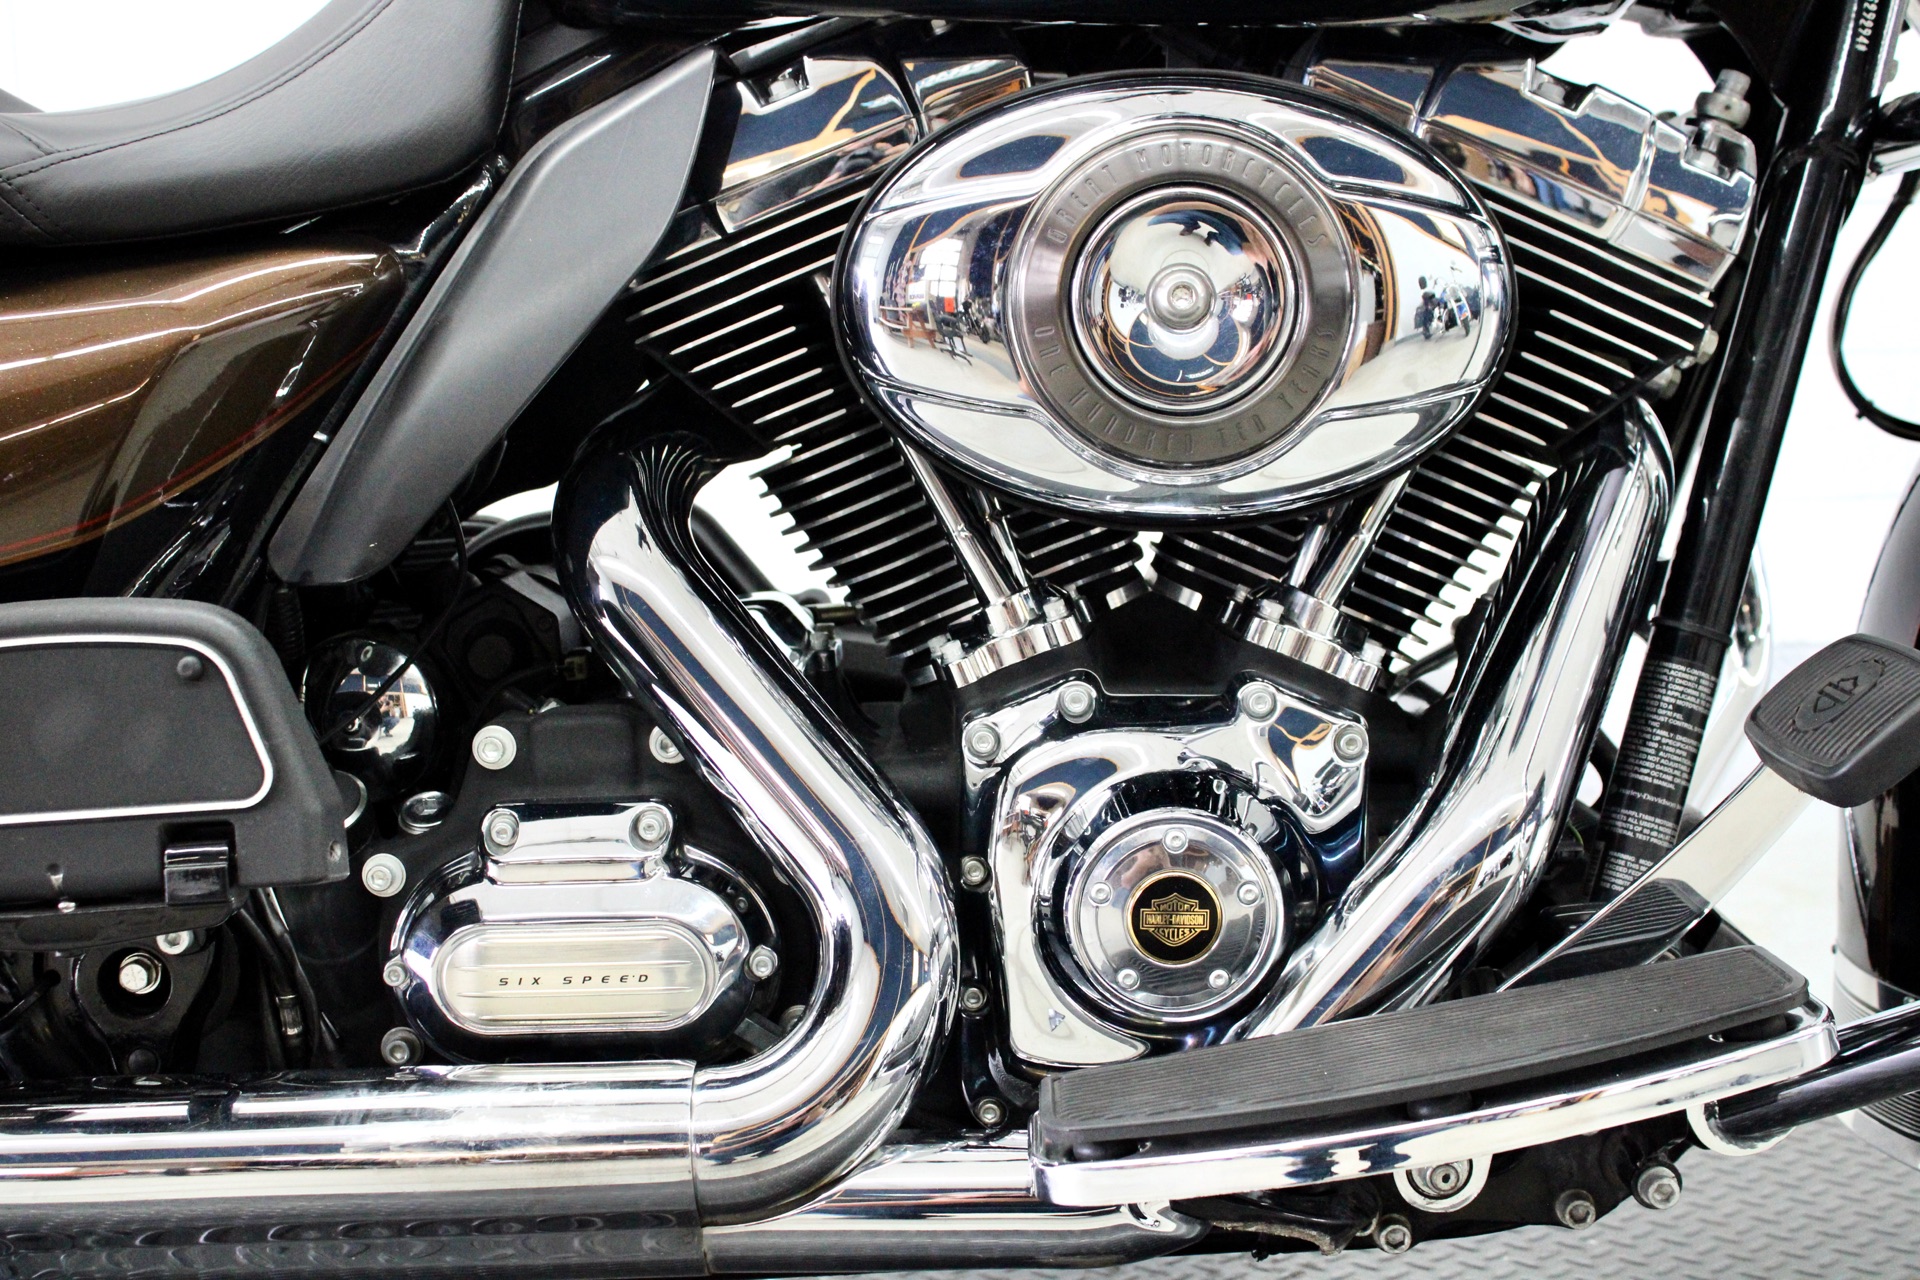 2013 Harley-Davidson Electra Glide® Ultra Limited 110th Anniversary Edition in Fredericksburg, Virginia - Photo 14